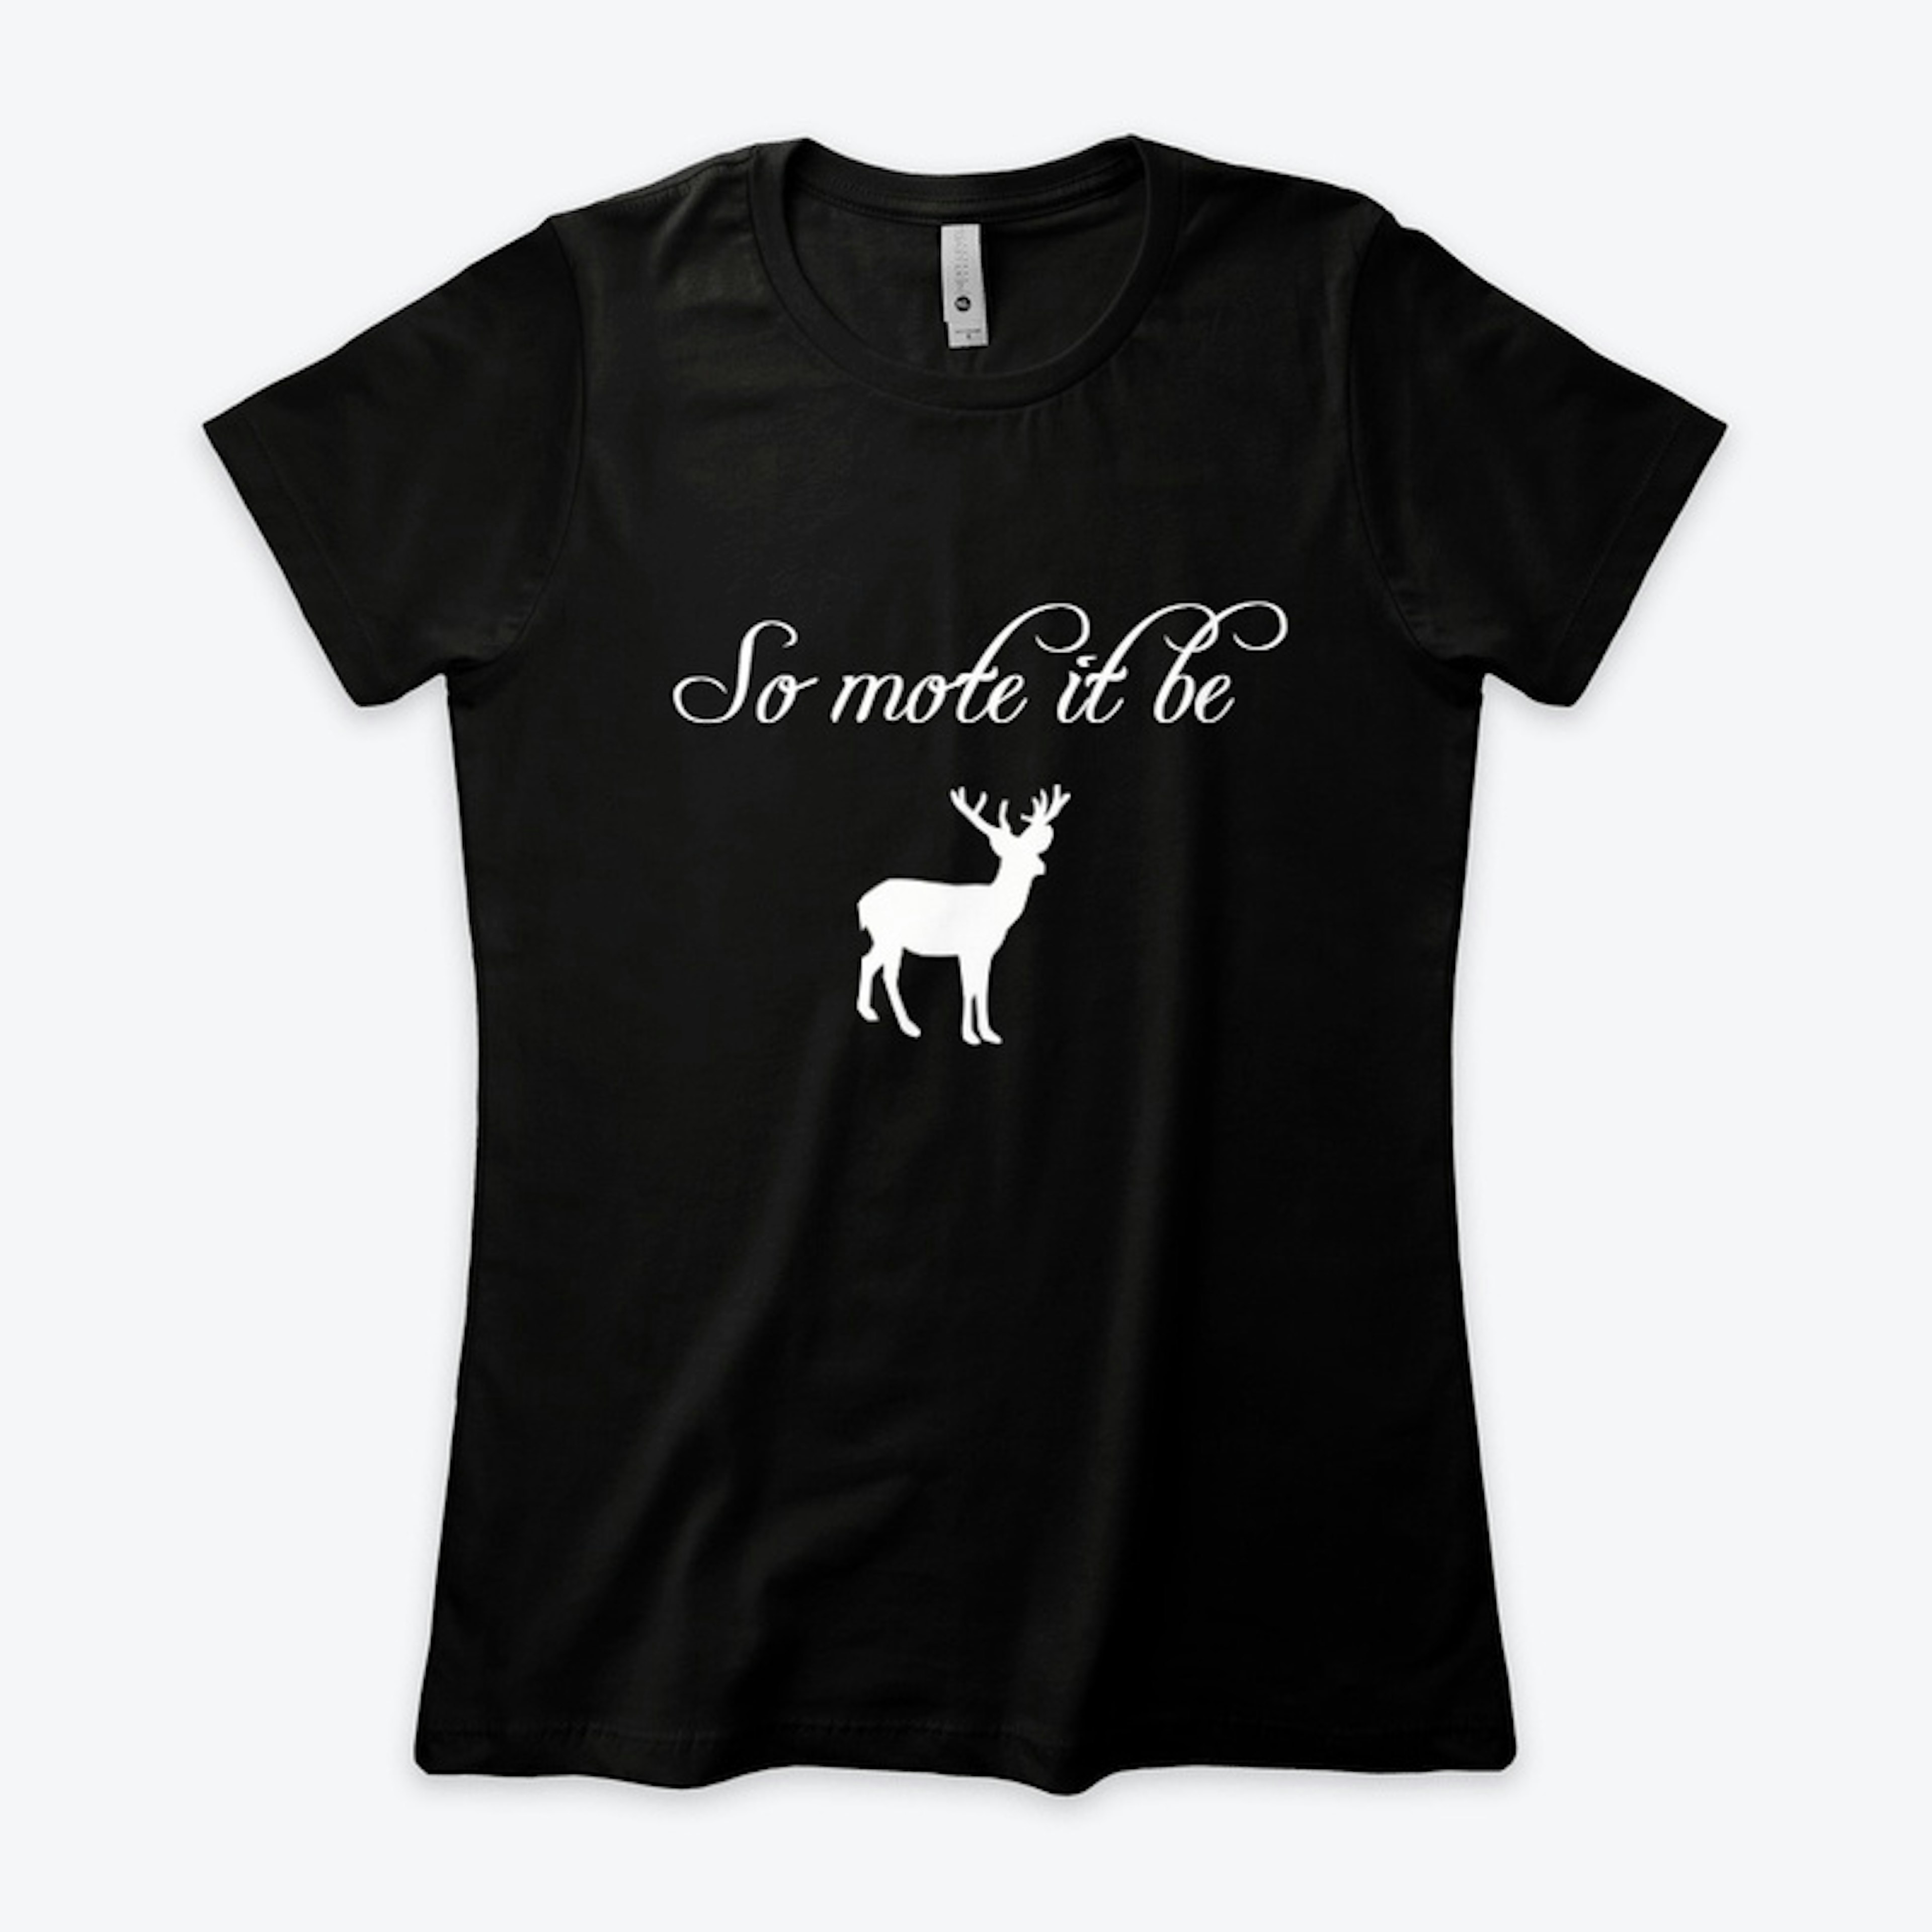 So Mote it Be - T-Shirt